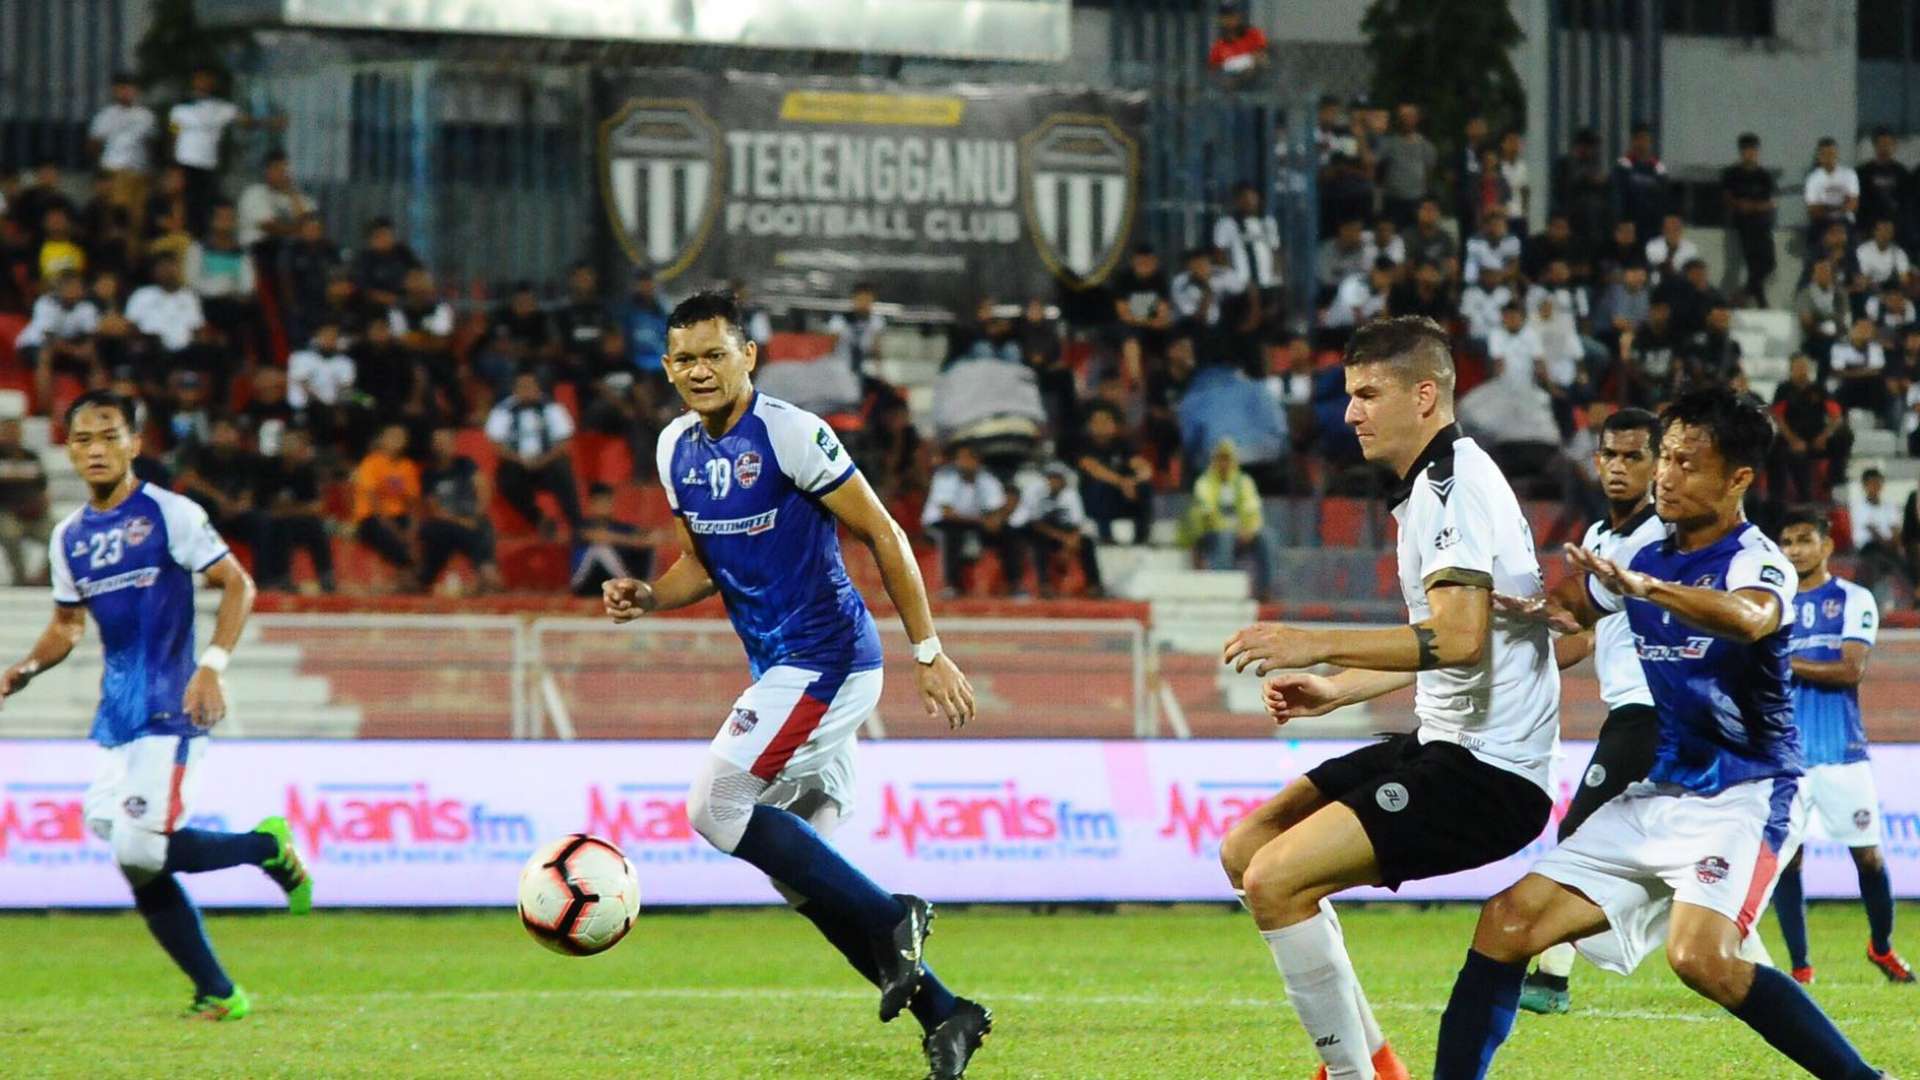 Igor Zonjic, Terengganu FC v Ultimate FC, FA Cup, 2 Apr 2019